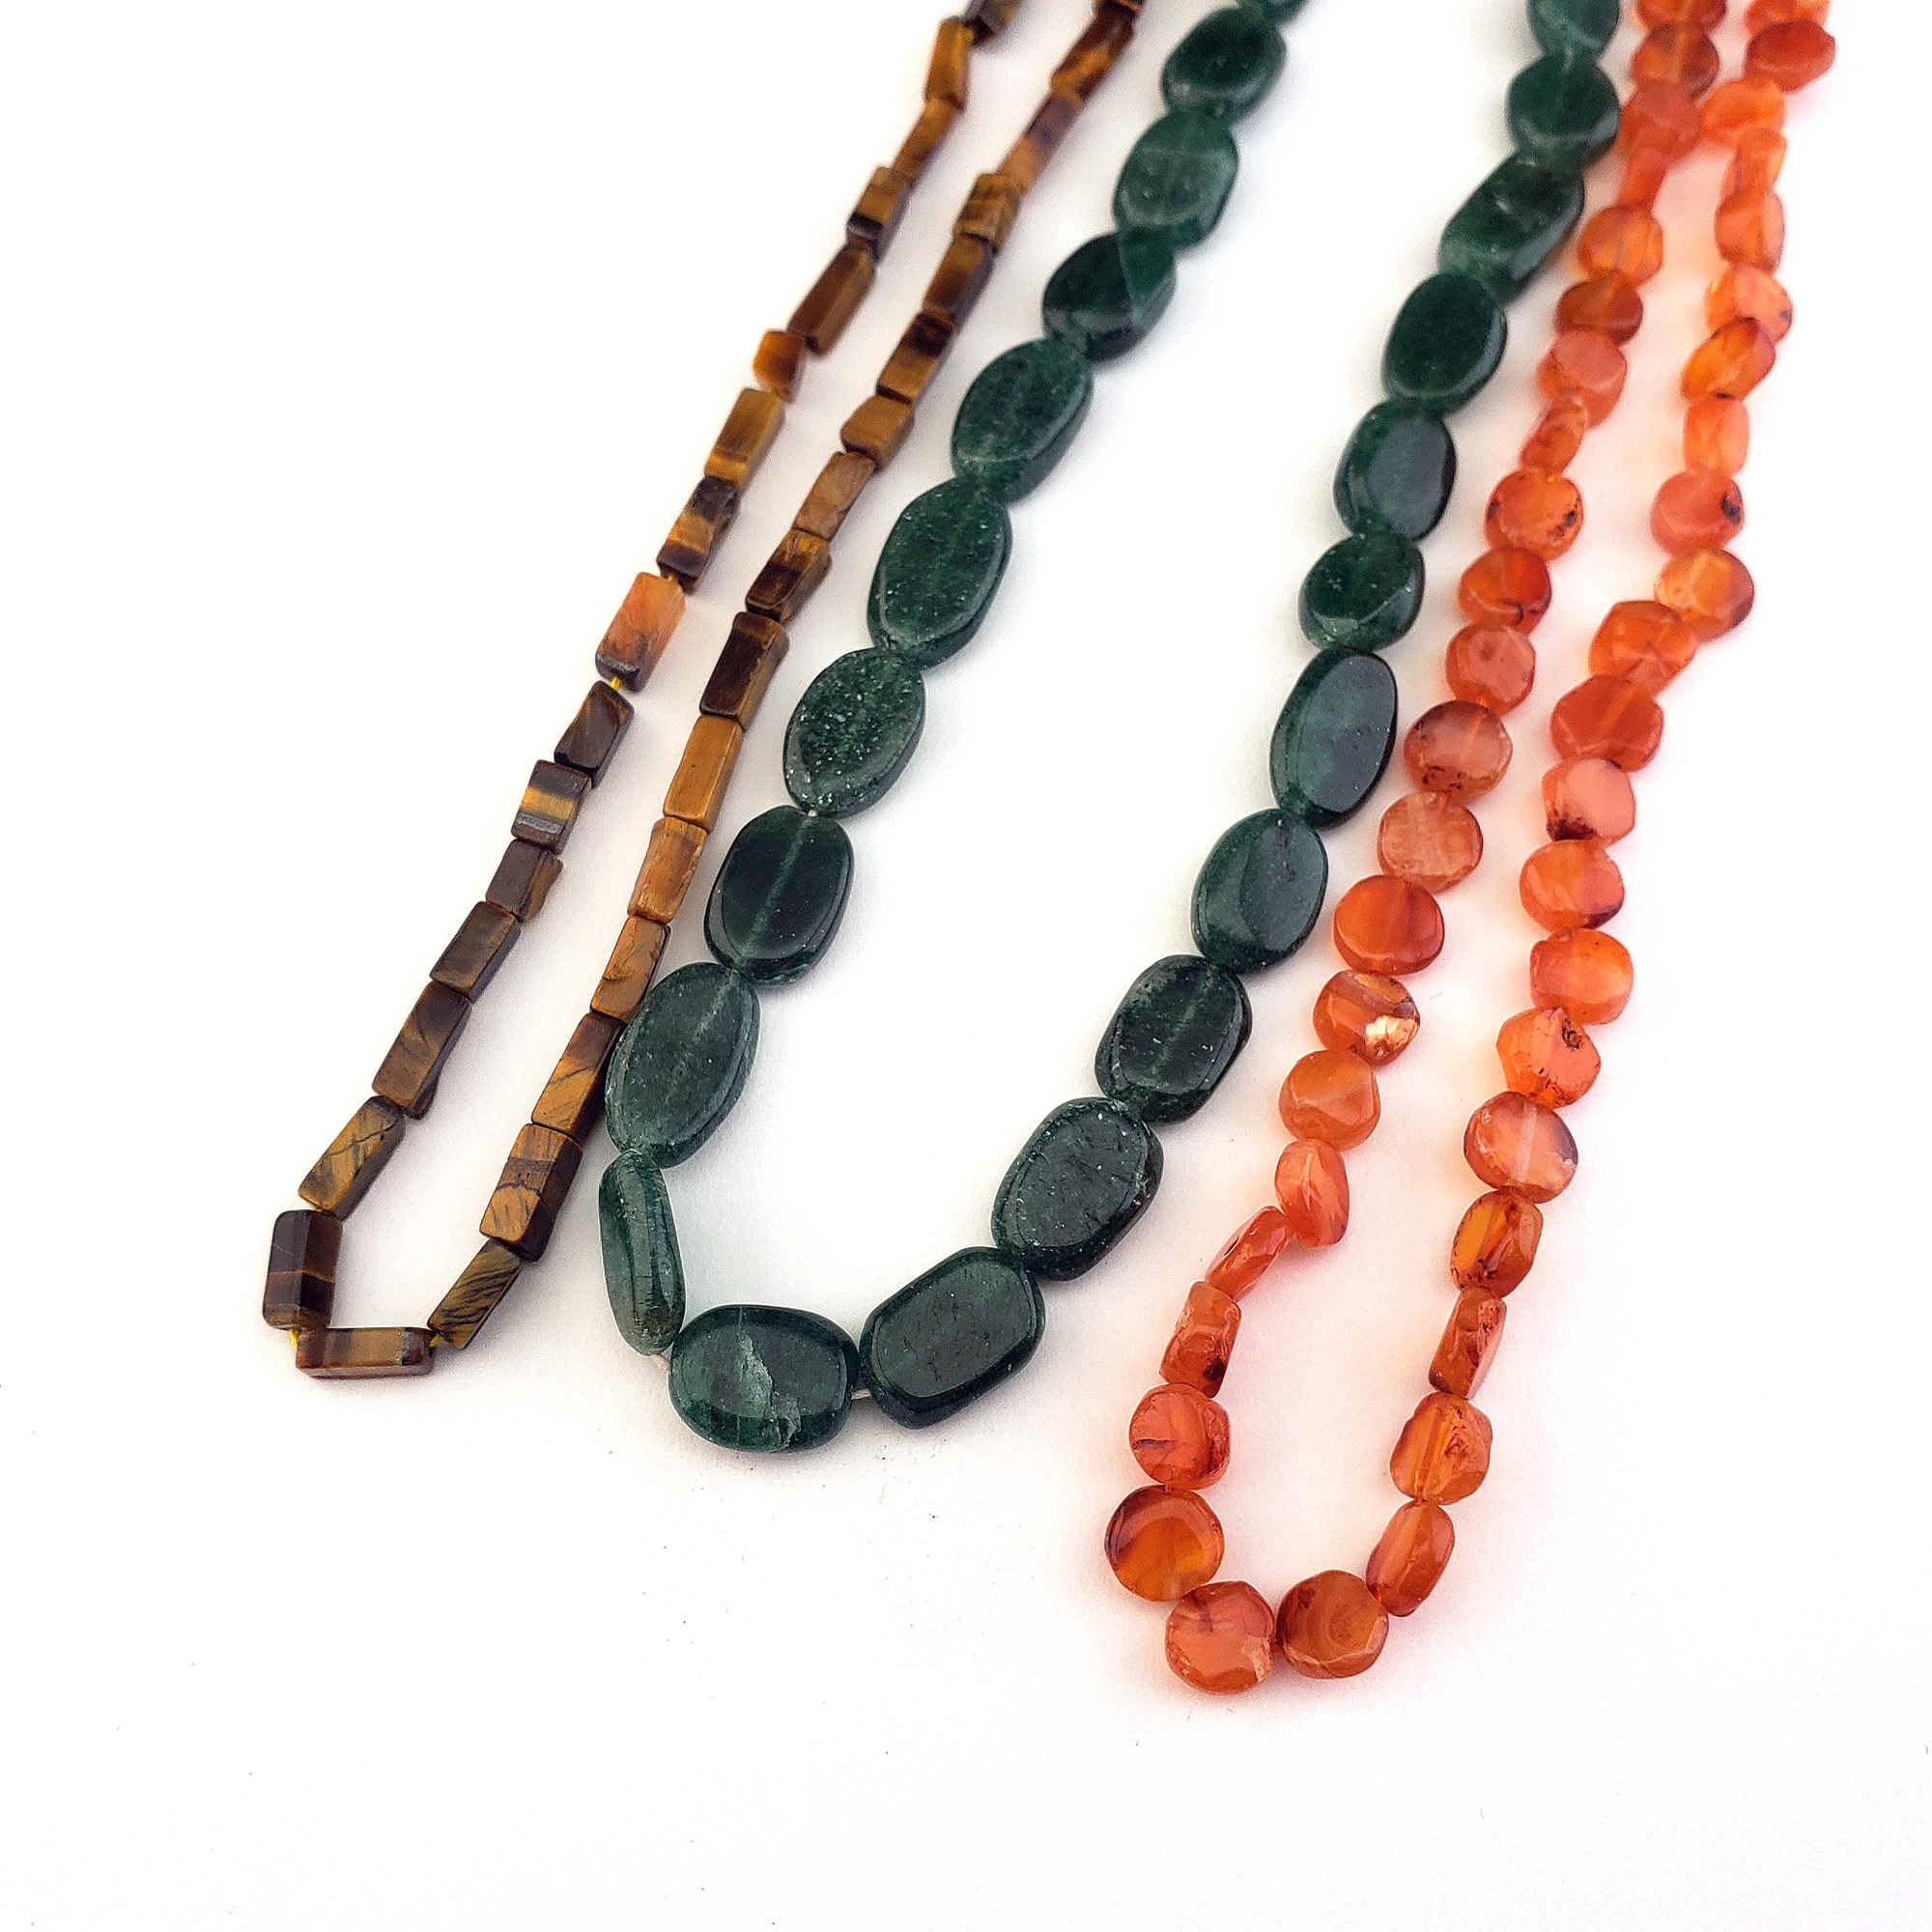 Crystal Beads Blind Bag - 3 Strands of Gemstone Beads - Tigers Eye, Green Aventurine, Carnelian